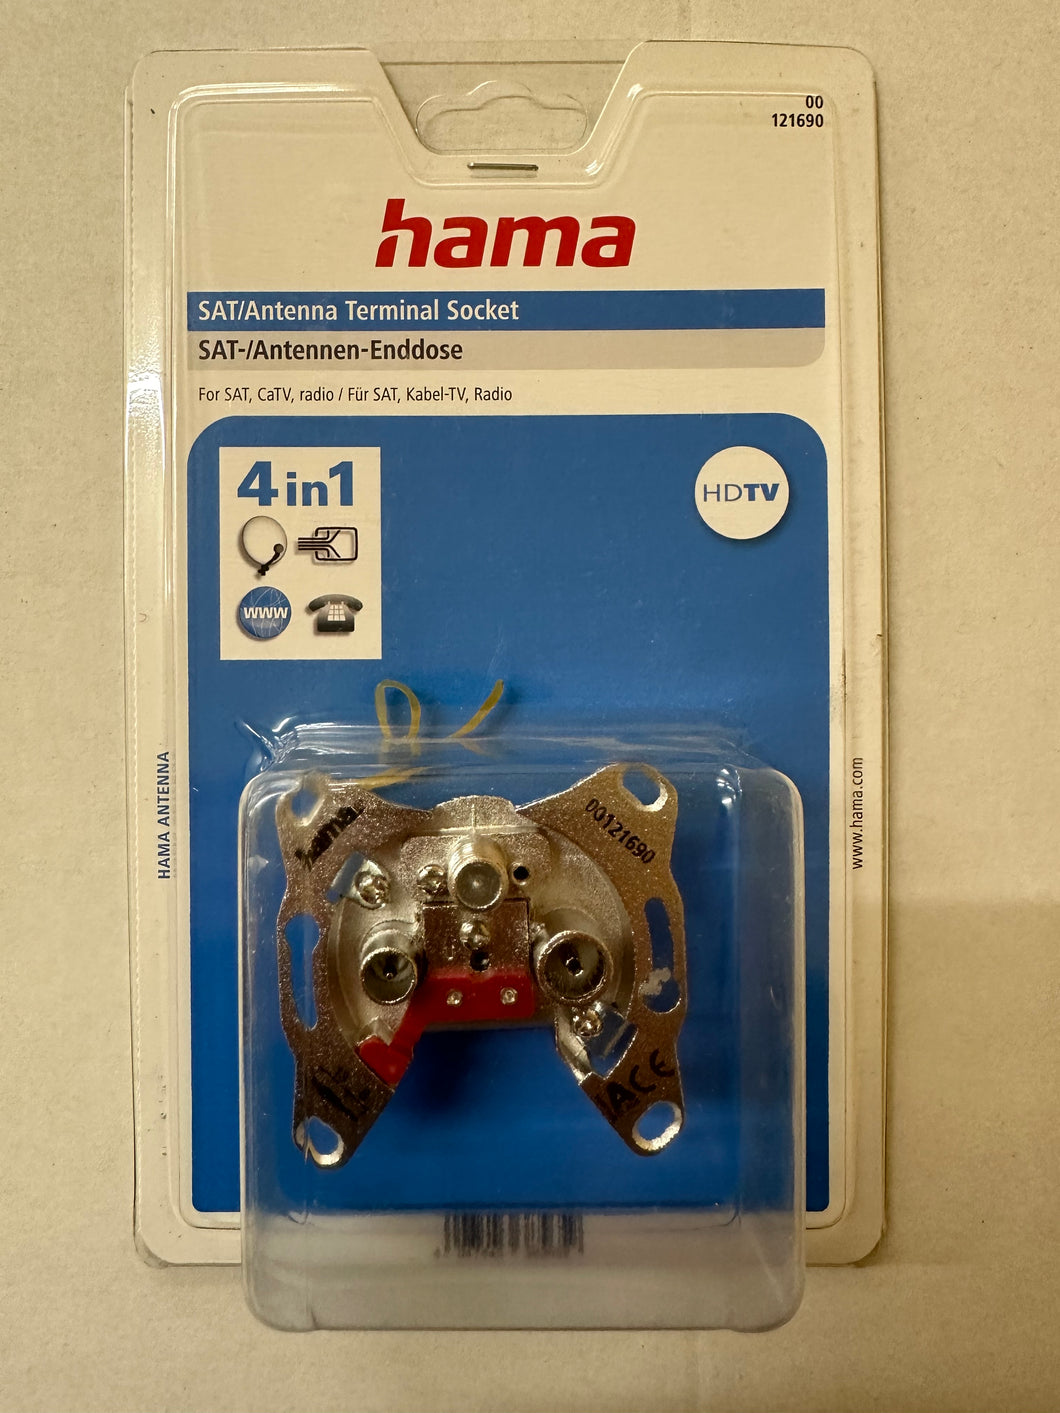 Hama SAT-/Antennen-Enddose 4in1 0dB